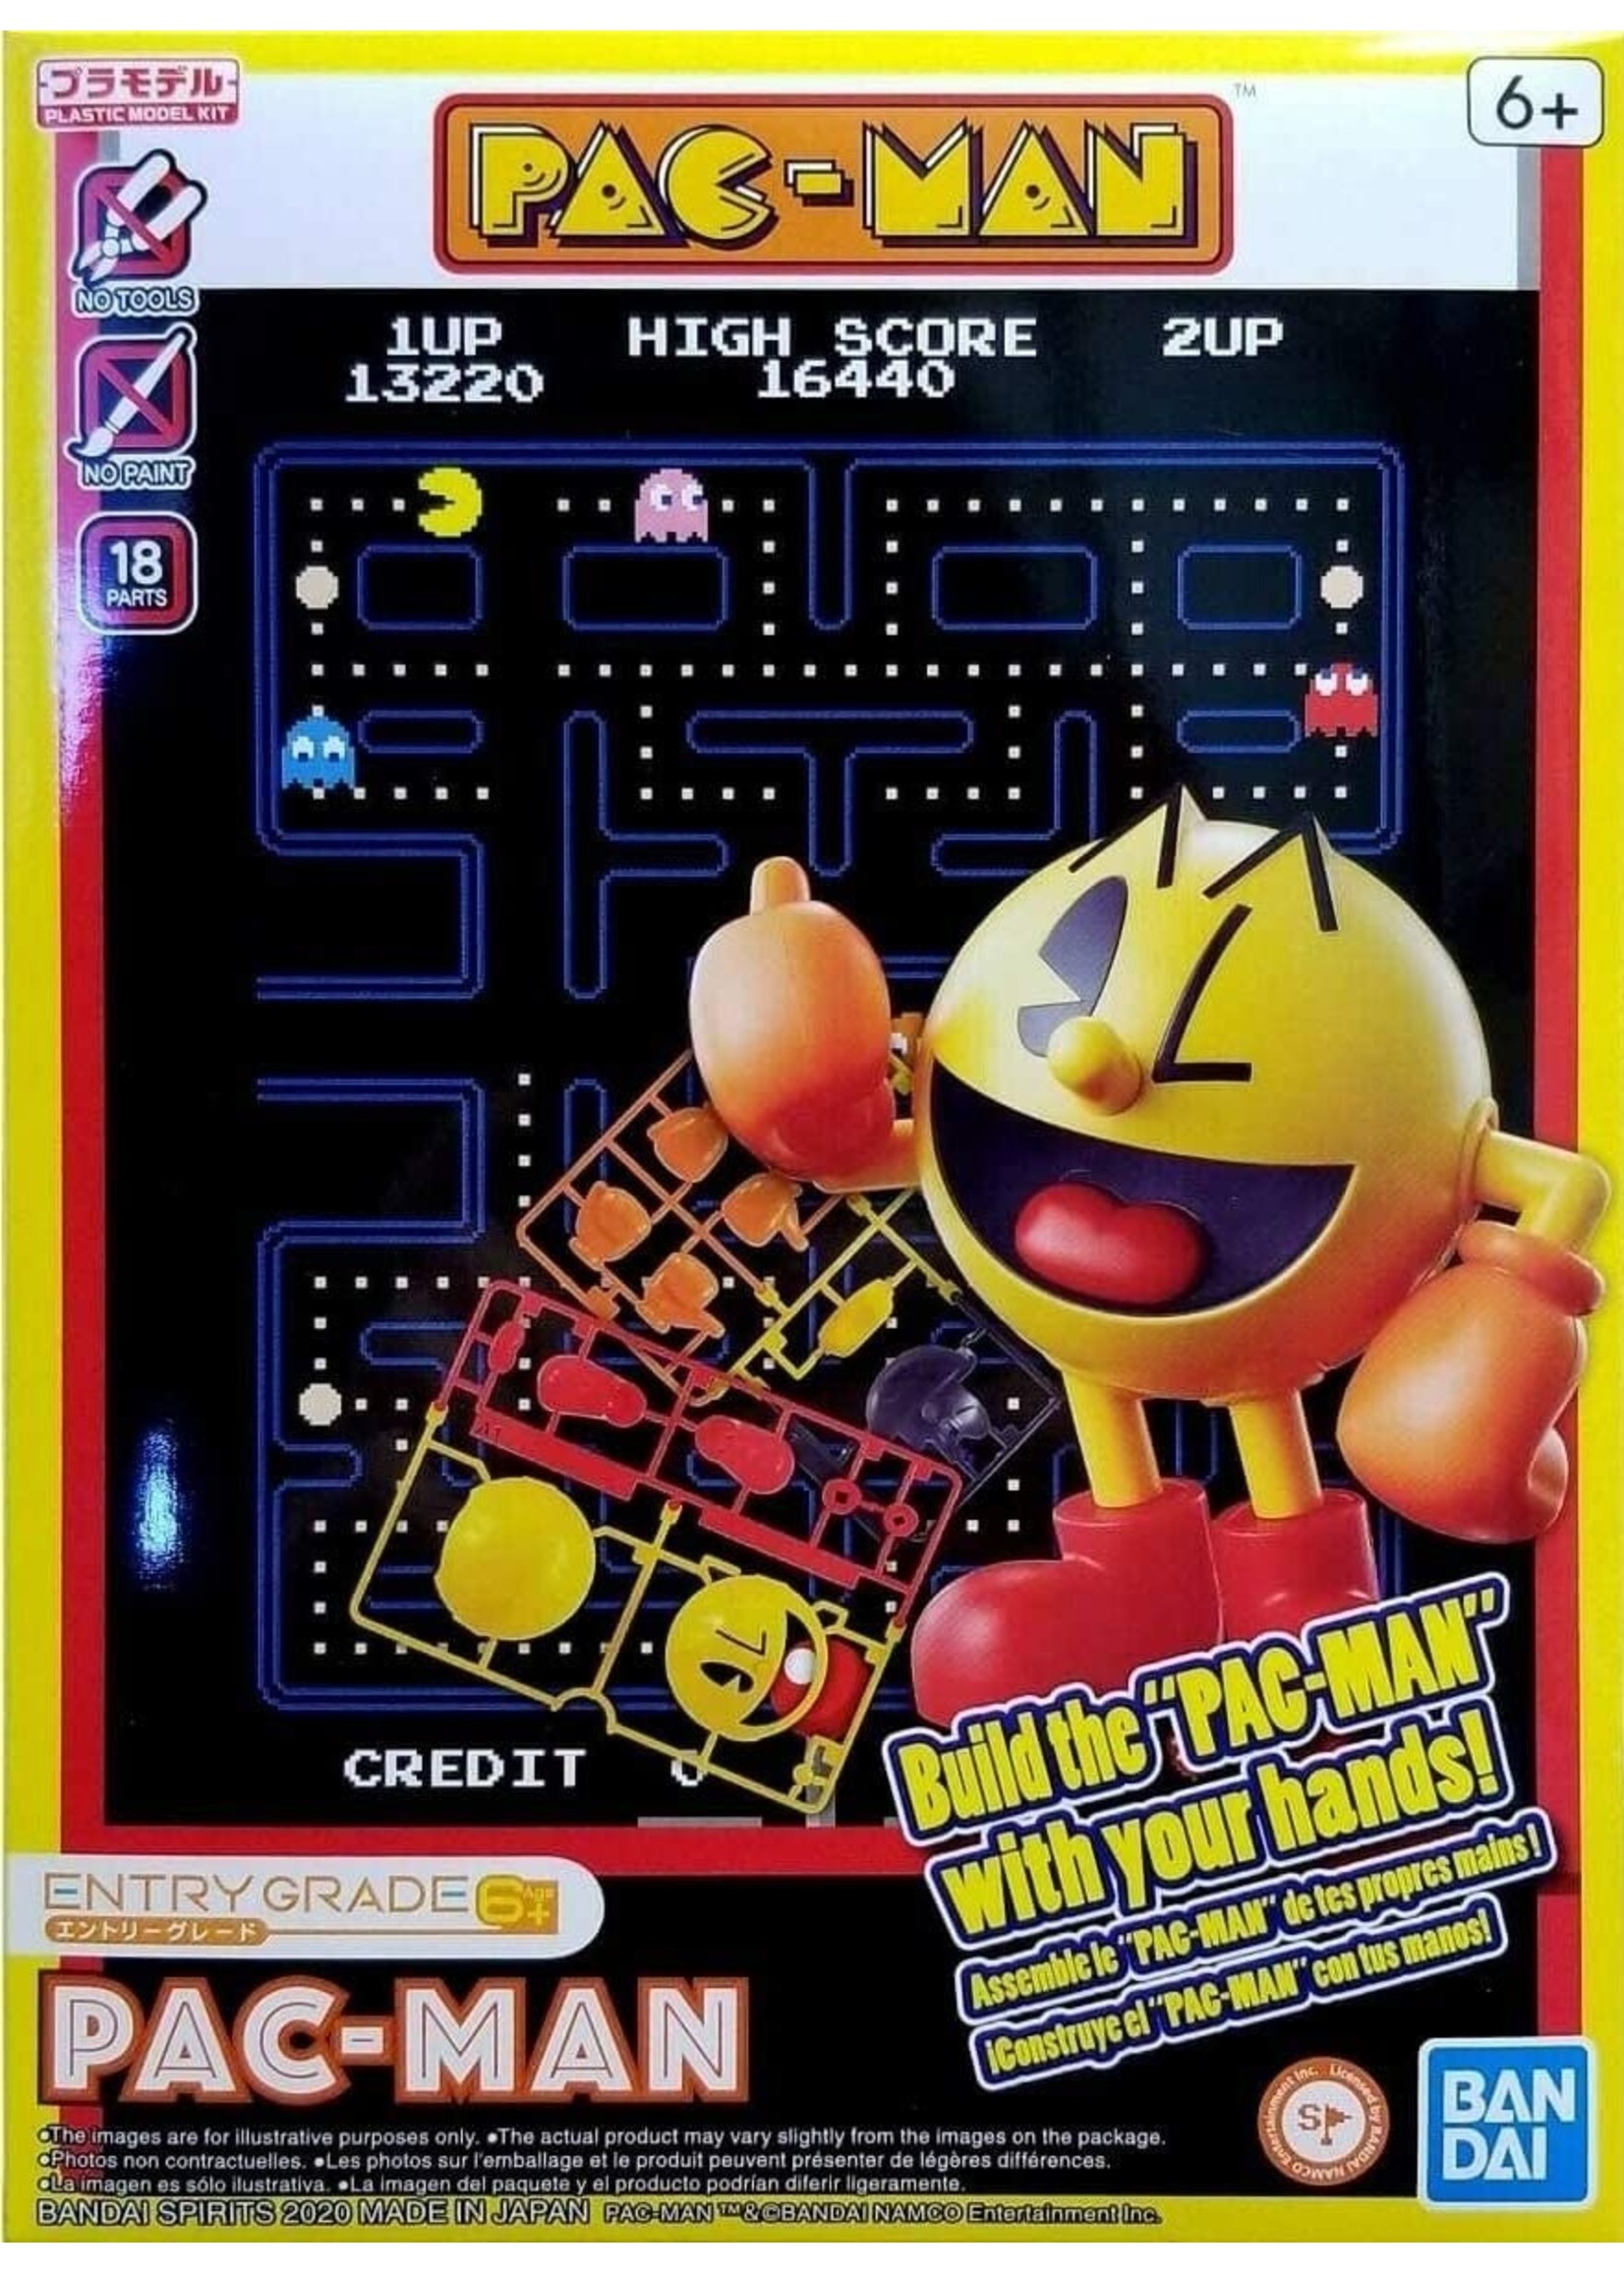 Bandai Entry Grade Pac-man Plastic Model Kit 2547758 for sale online 